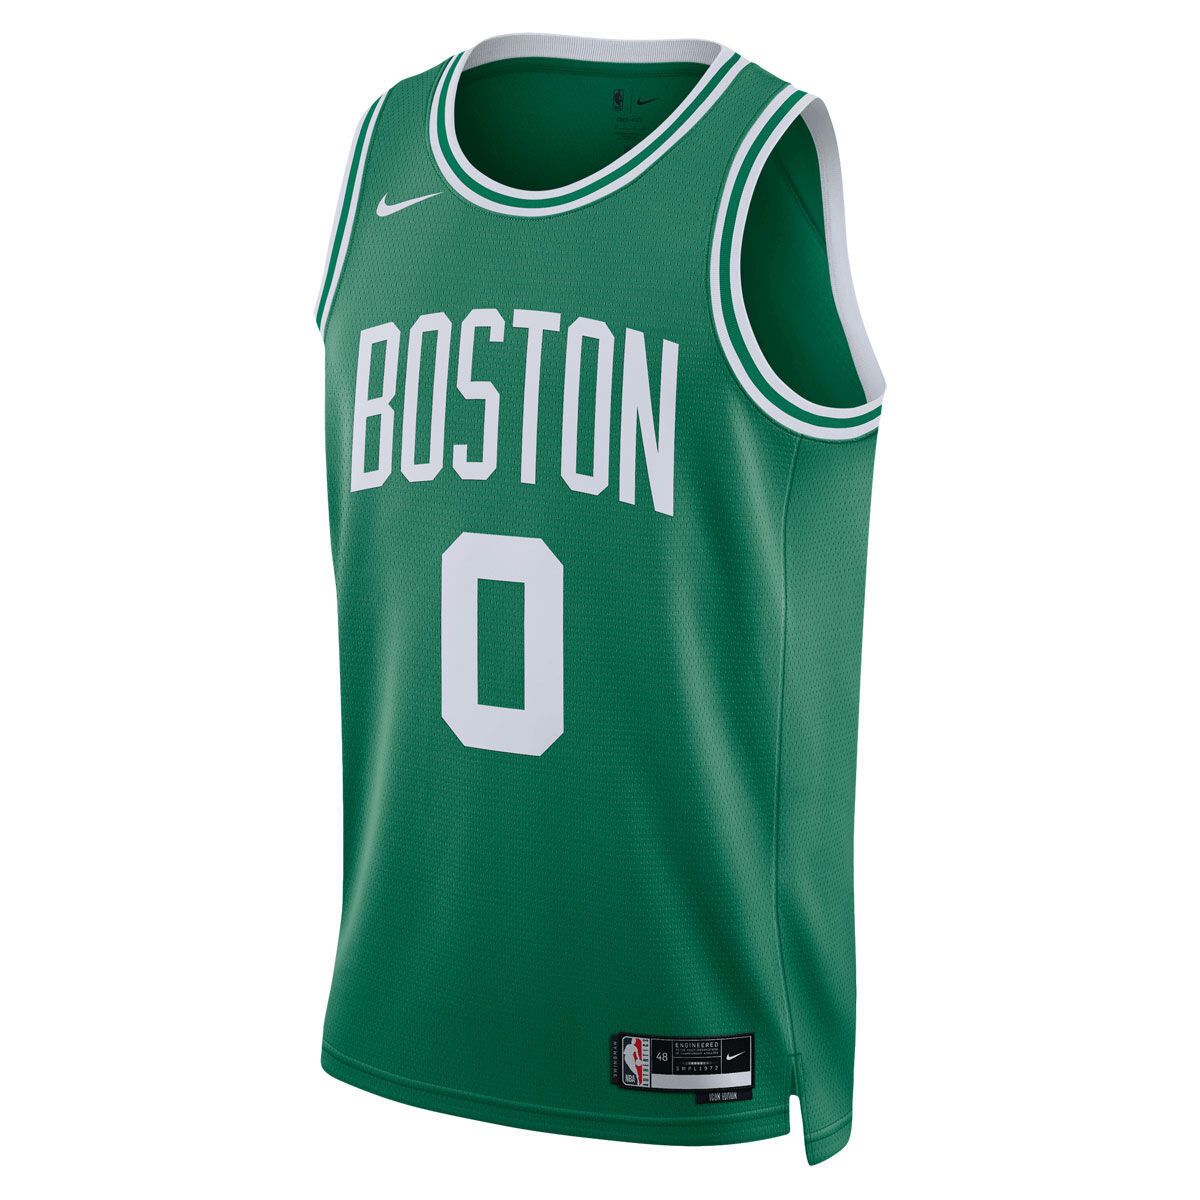  NBA Boston Celtics Women's Short Sleeve Cycling Home Jersey,  Small, White : Sports & Outdoors